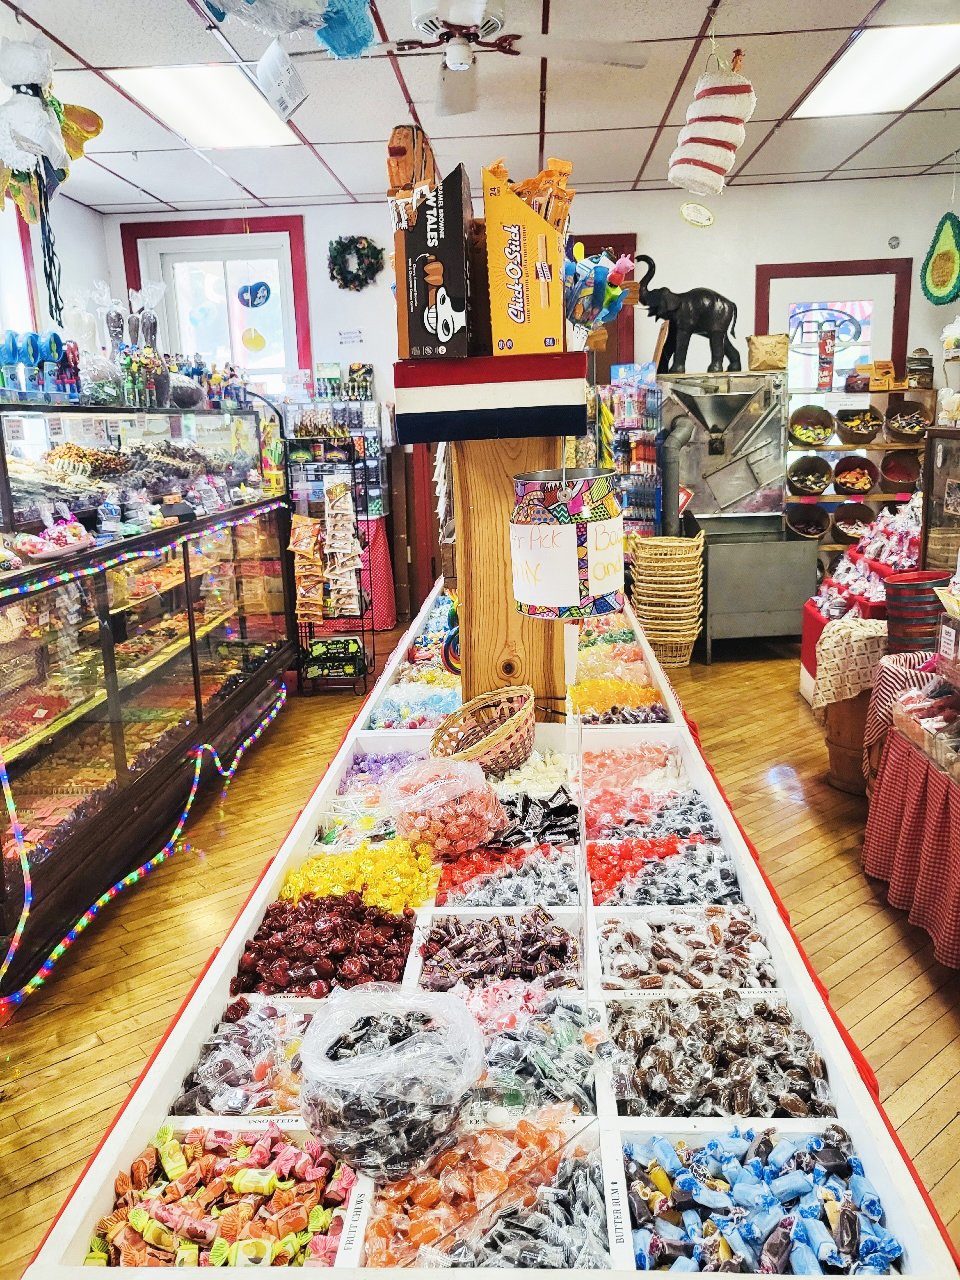 So Sweet! Step Inside the Port Clinton Peanut Shop. Berks County Living